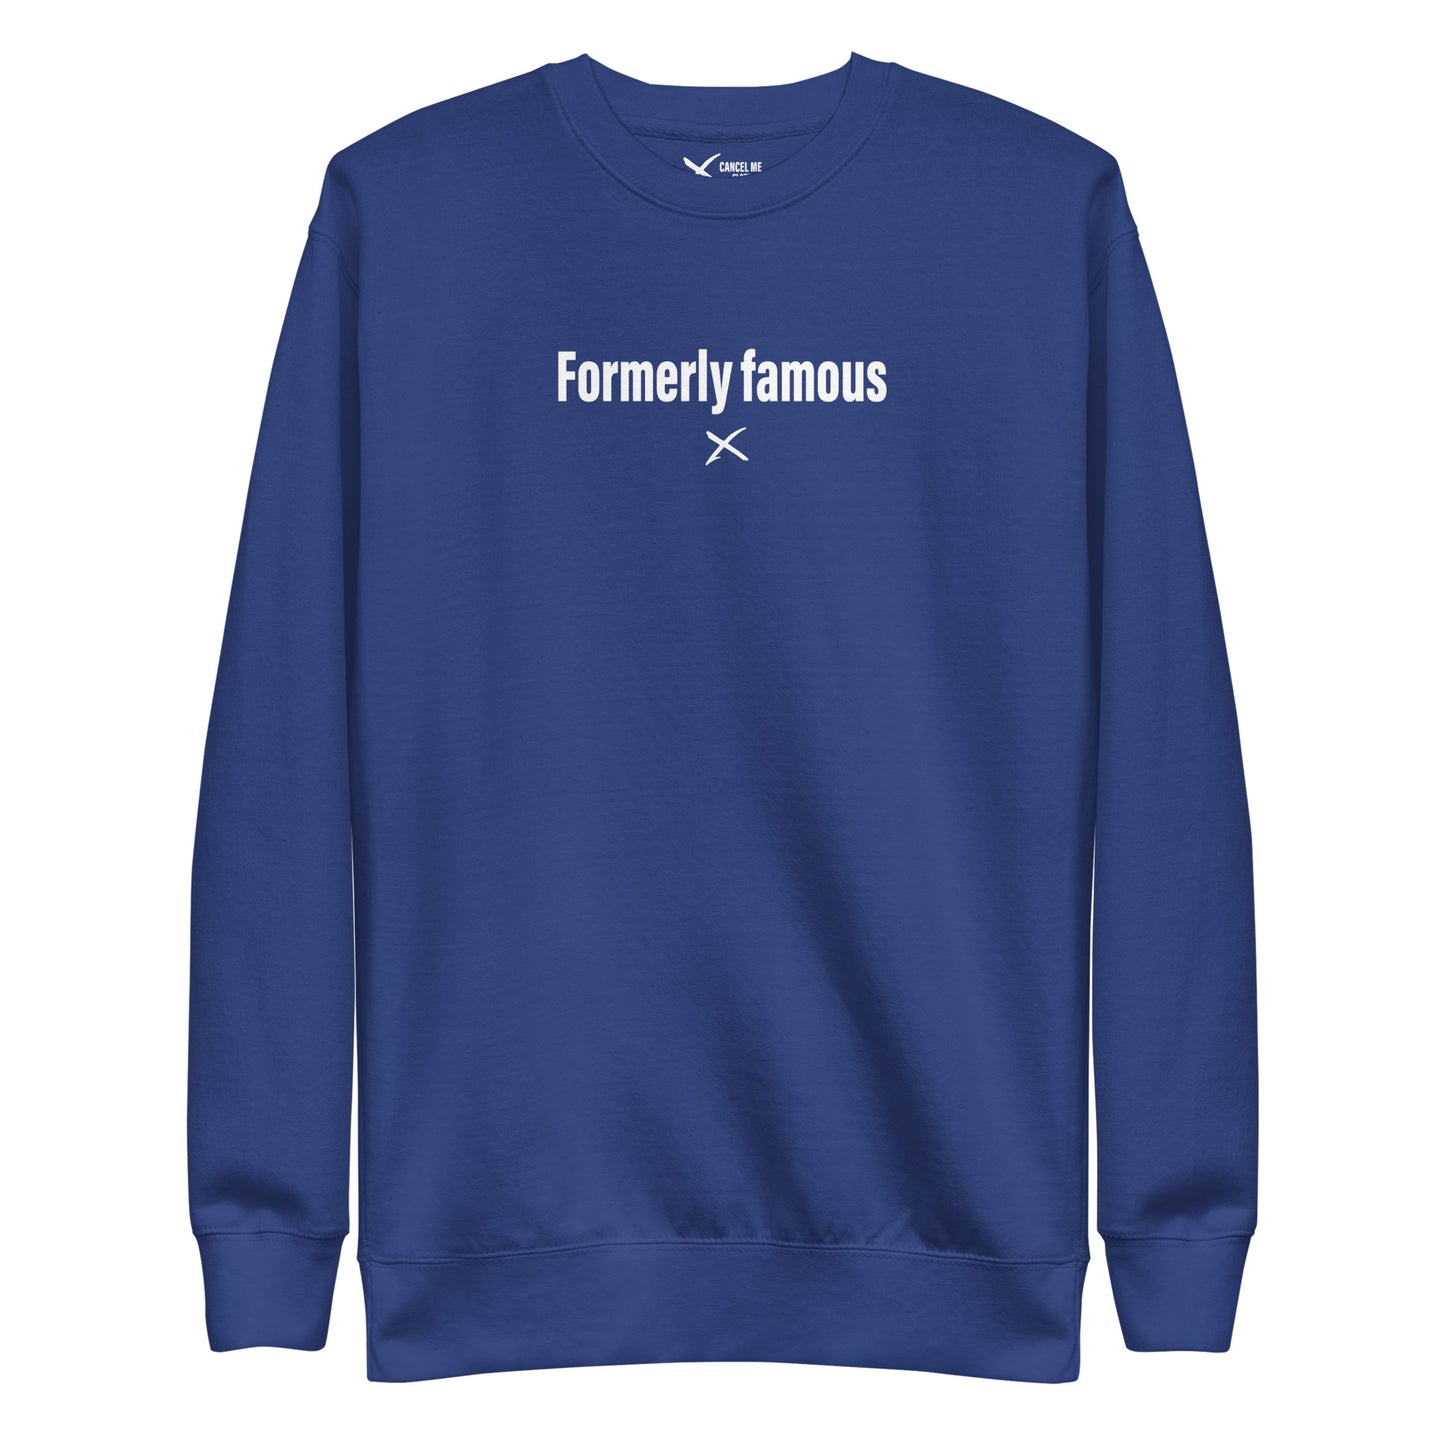 Formerly famous - Sweatshirt